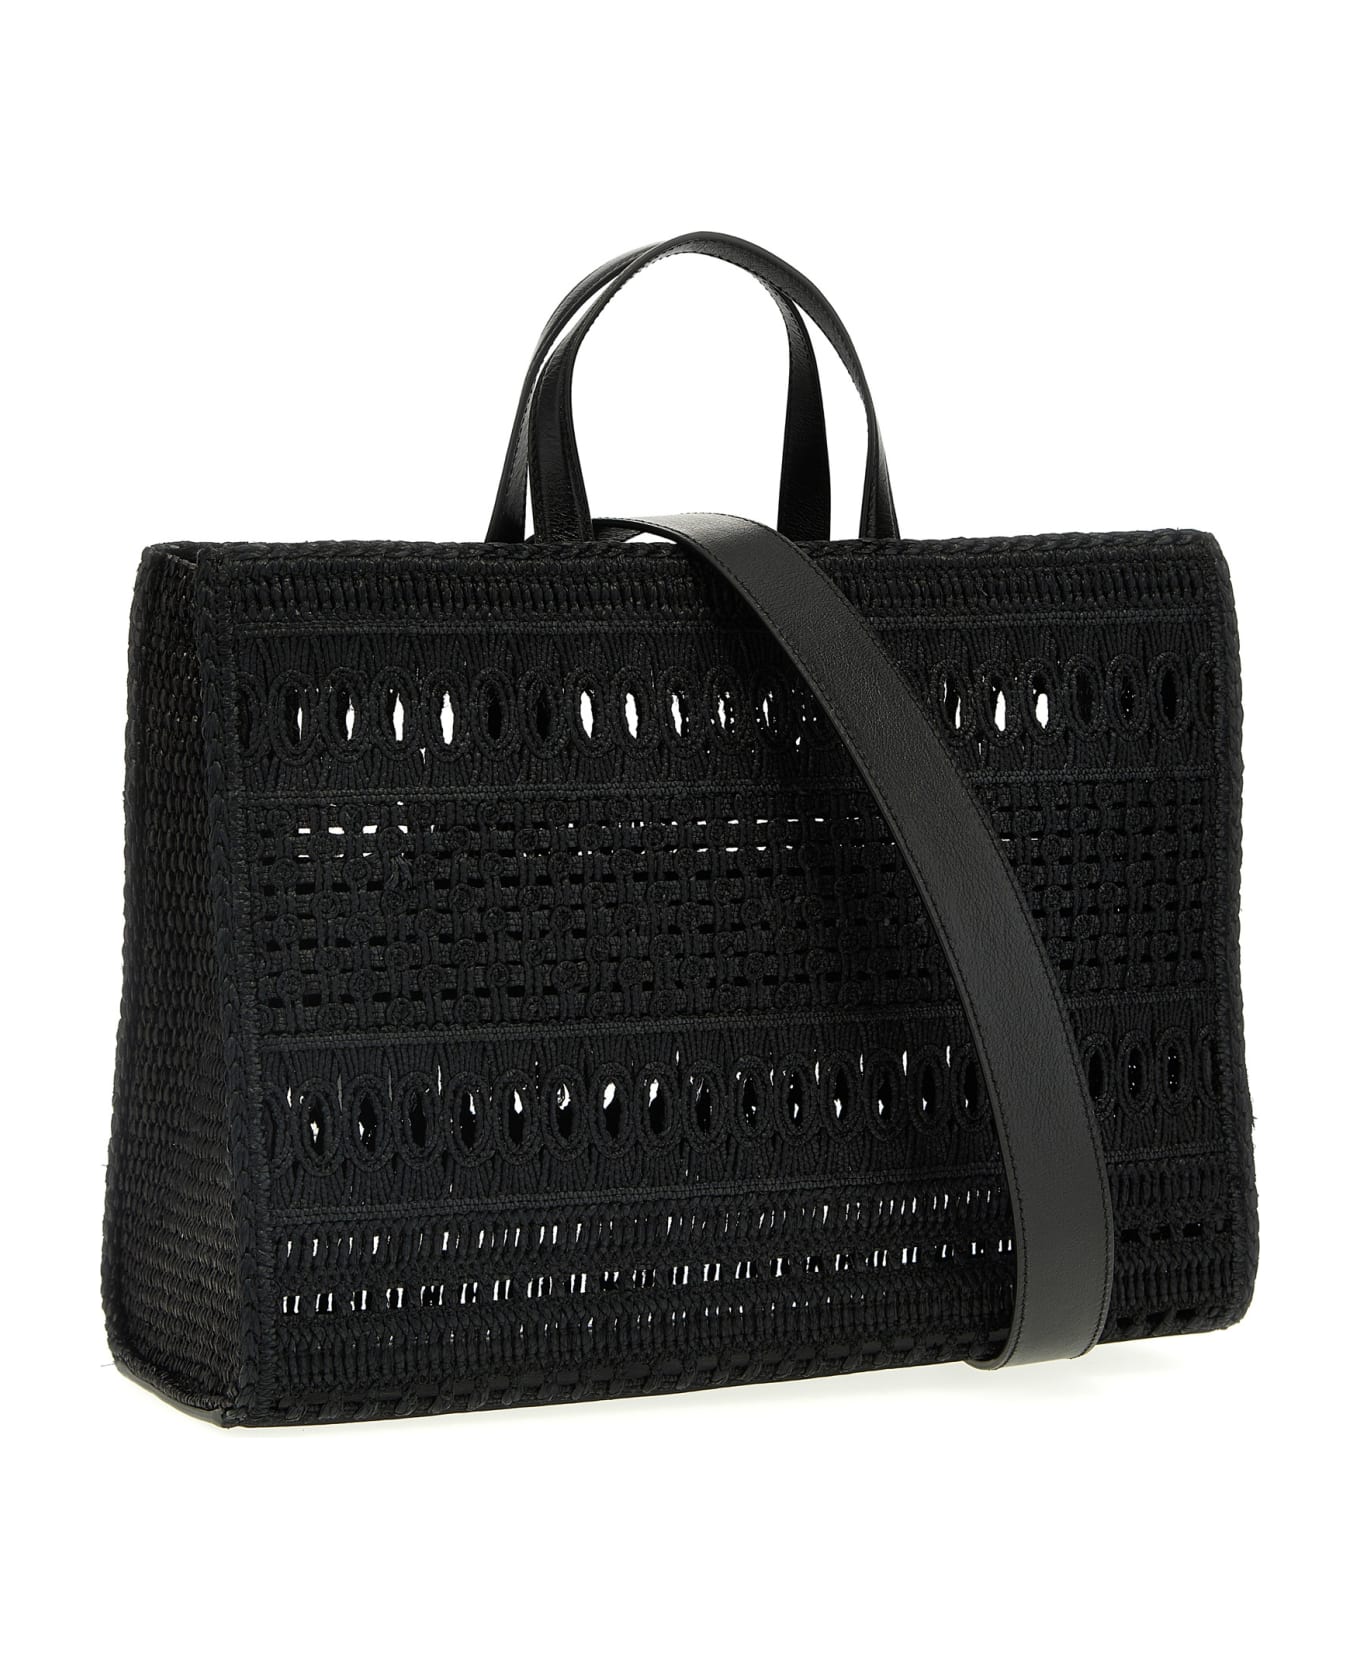 Givenchy G-tote Medium Shopper Bag - Black